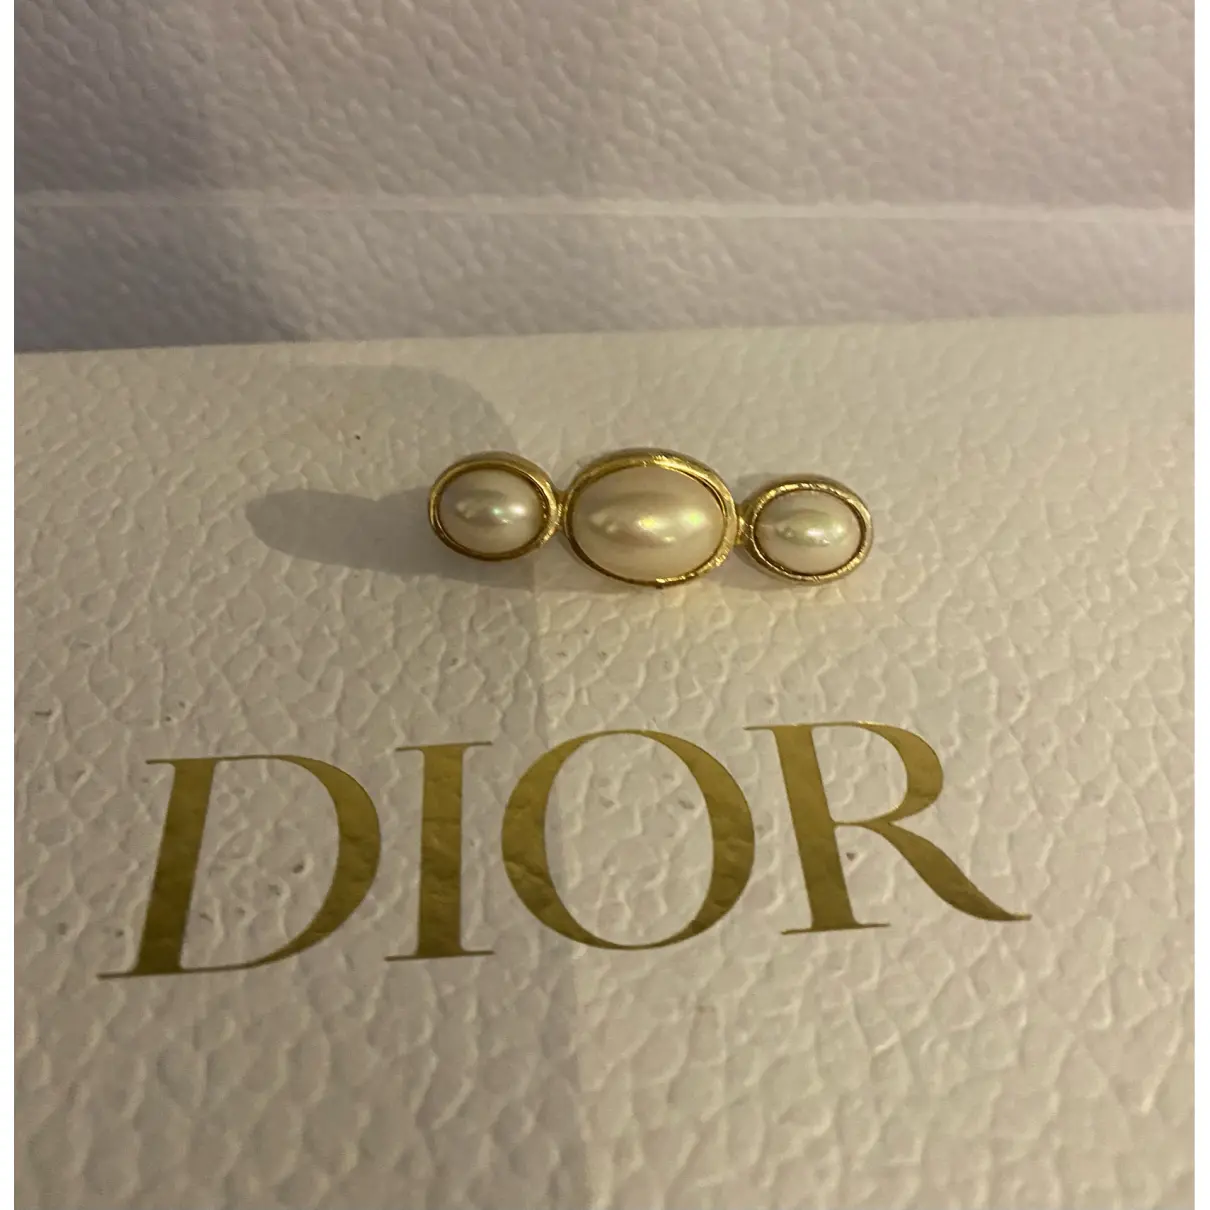 Buy Dior Pin & brooche online - Vintage